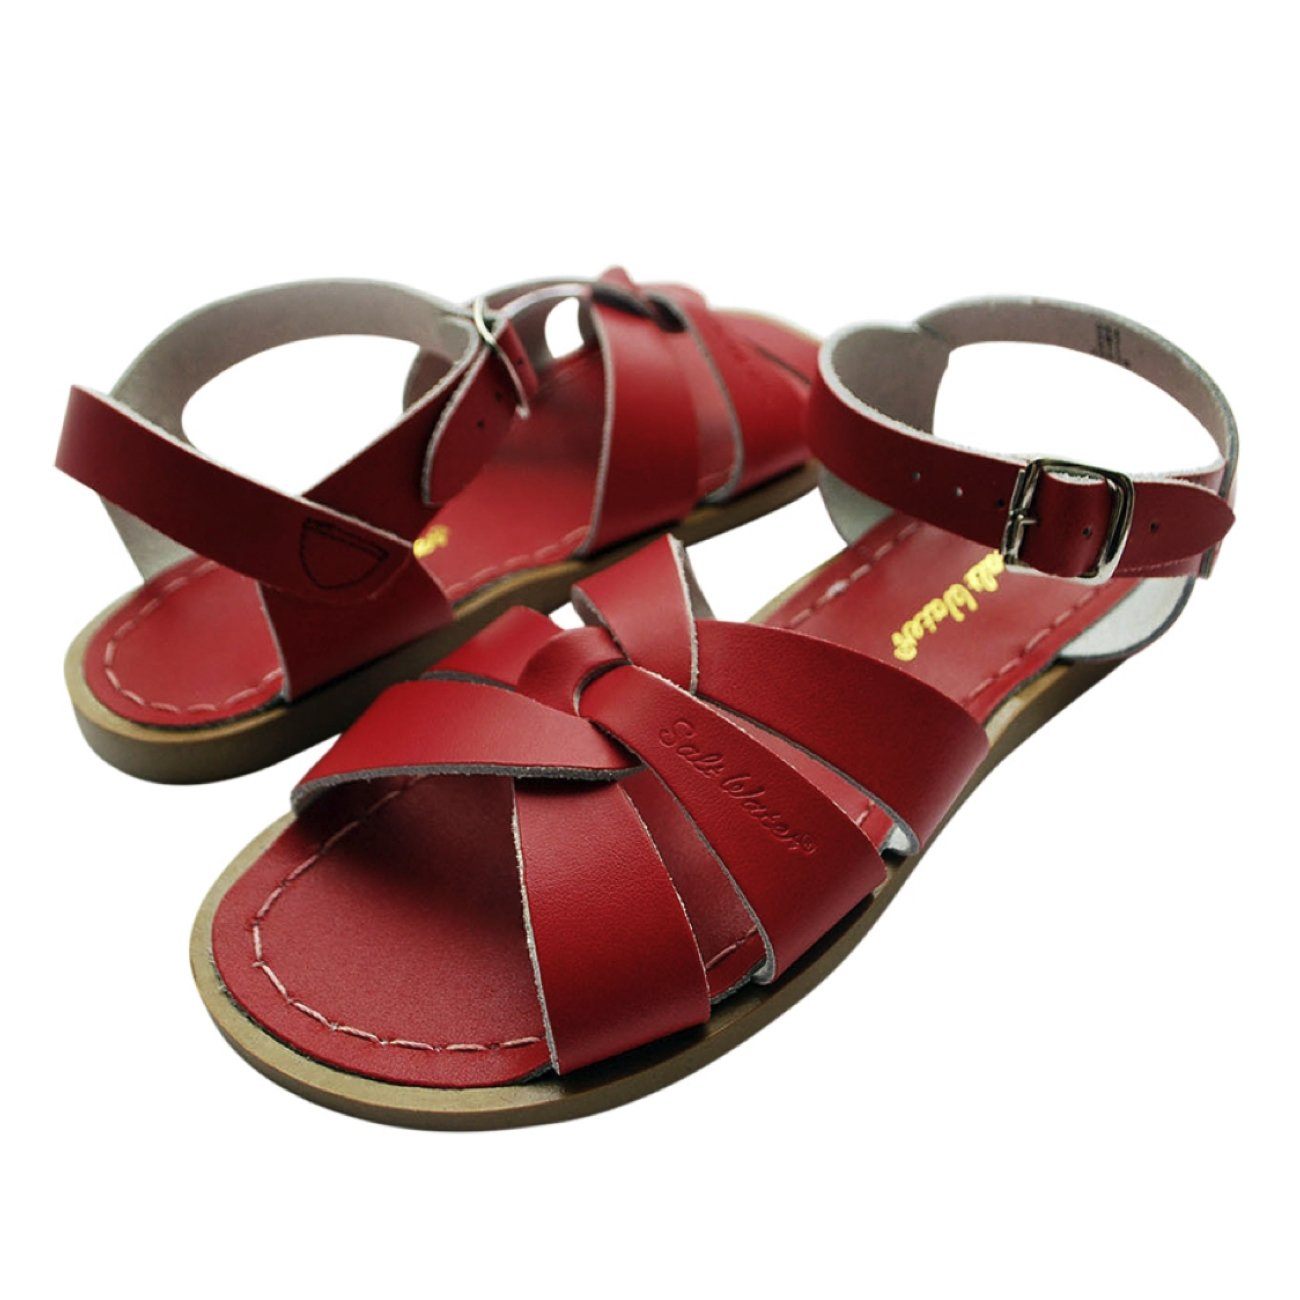 Salt Water Sandals, Original, Adults, Red Sandals Salt Water Sandals Red Adult 4 / Aus Womens 6 